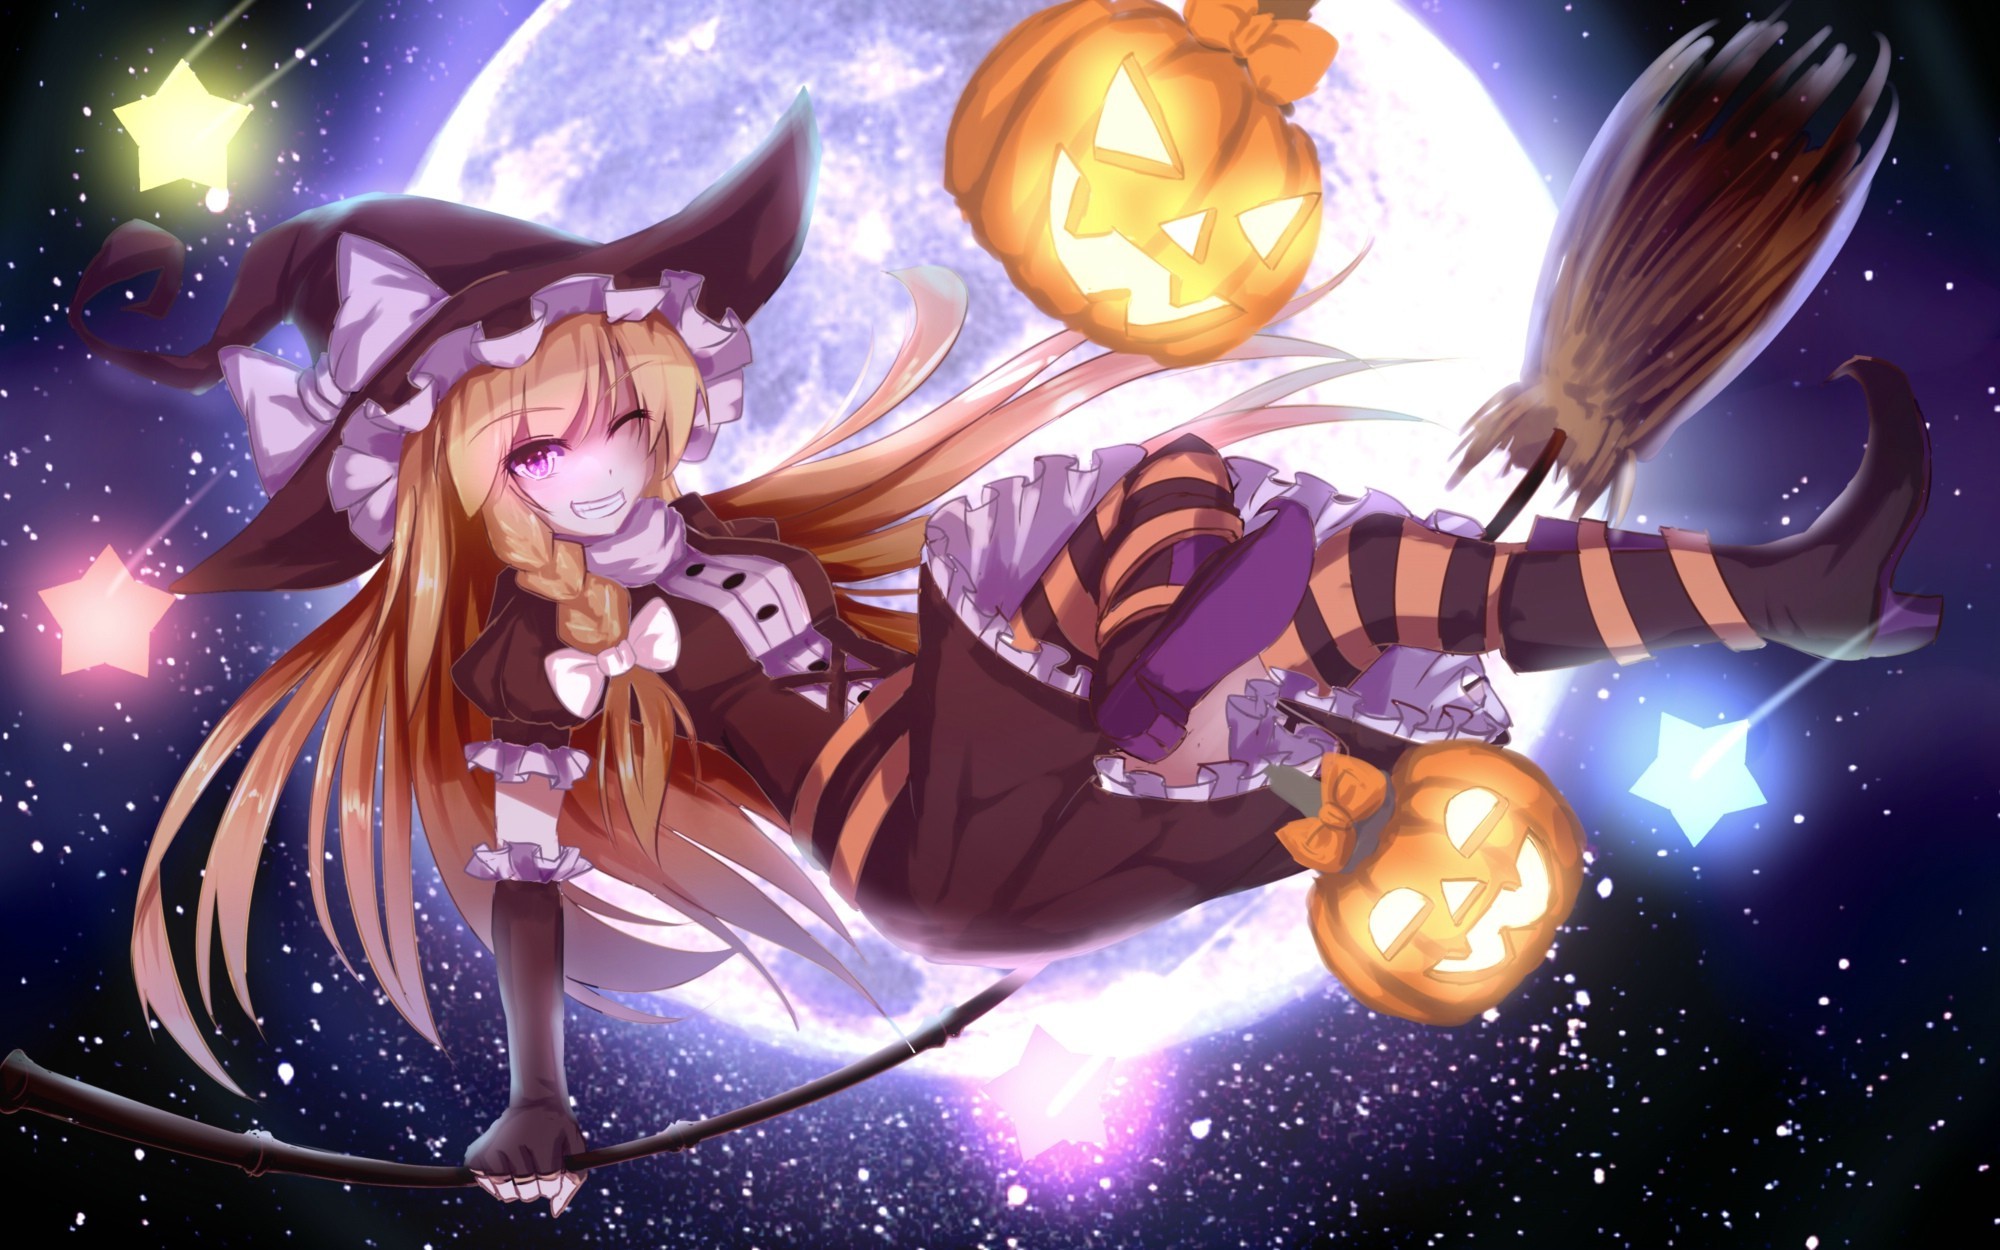 Happy Halloween - Anime Wallpaper by Siimeo on DeviantArt